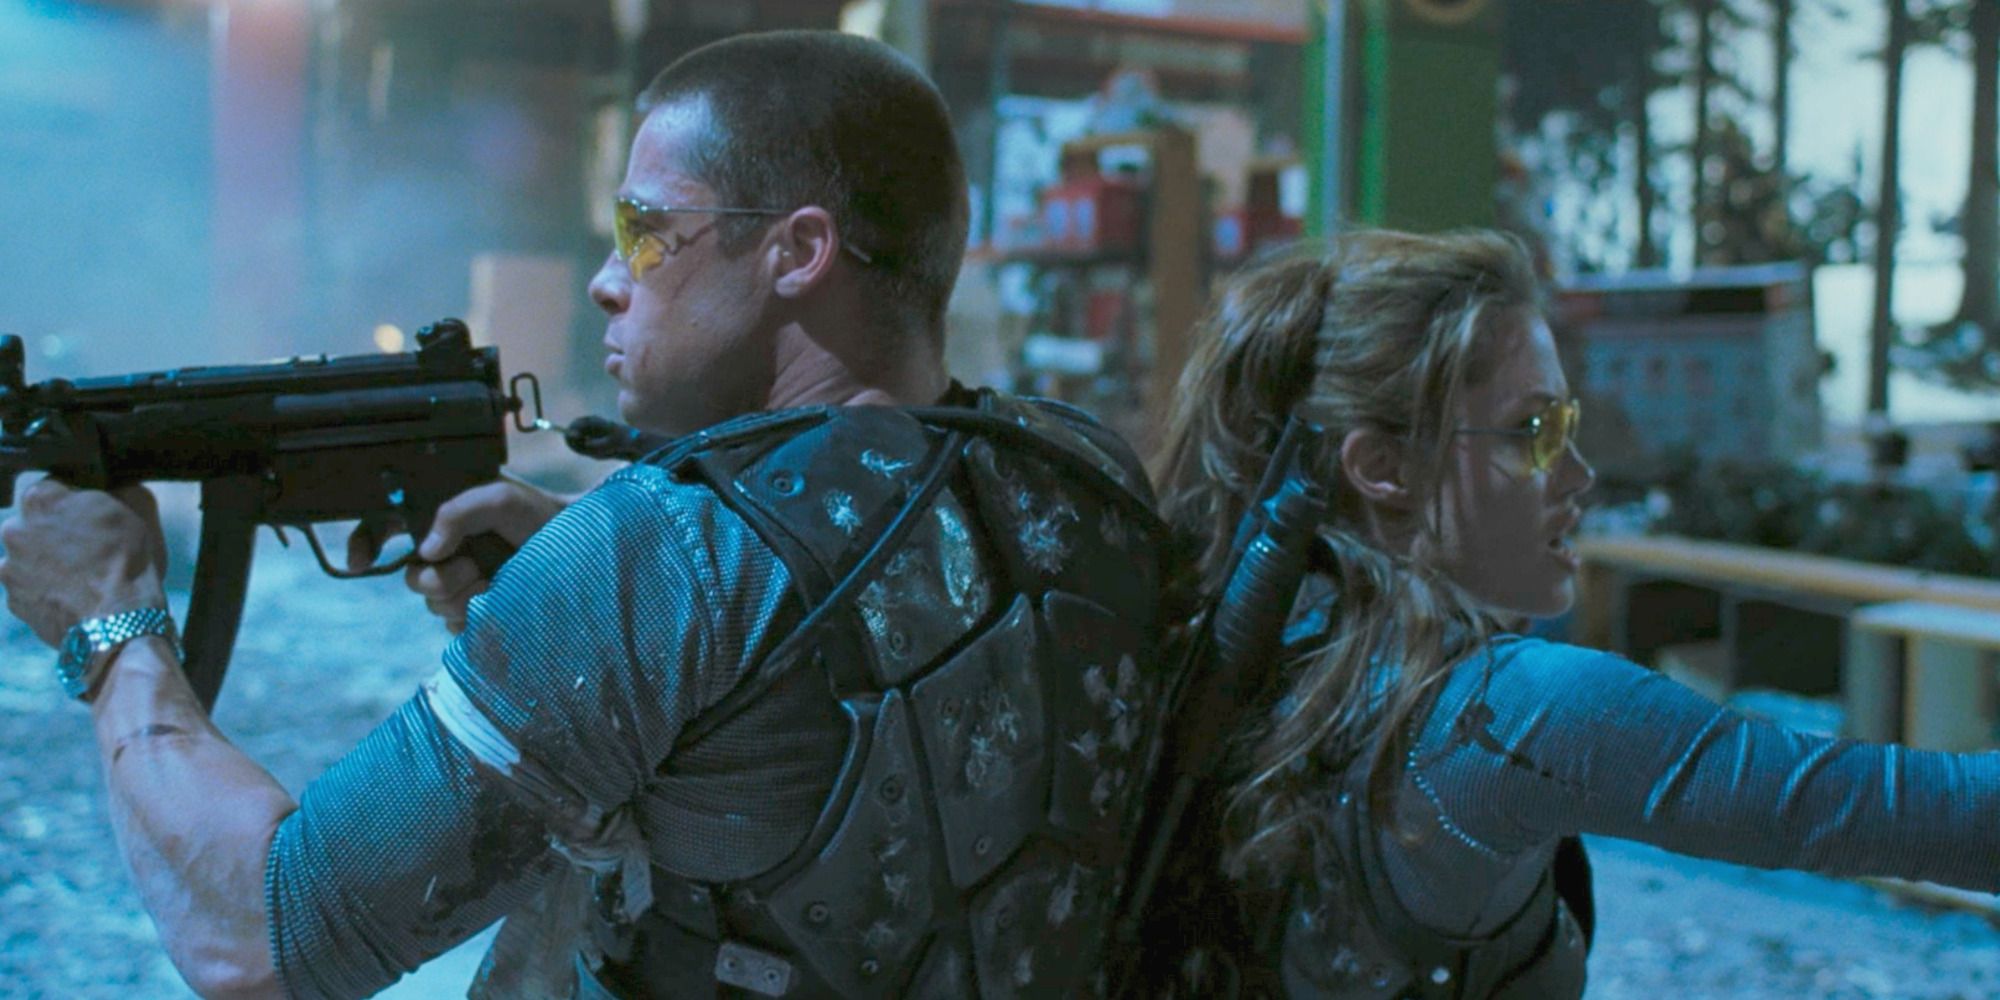 John (Brad Pitt) and Jane (Angelina Jolie) take aim on Mr. & Mrs. Smith